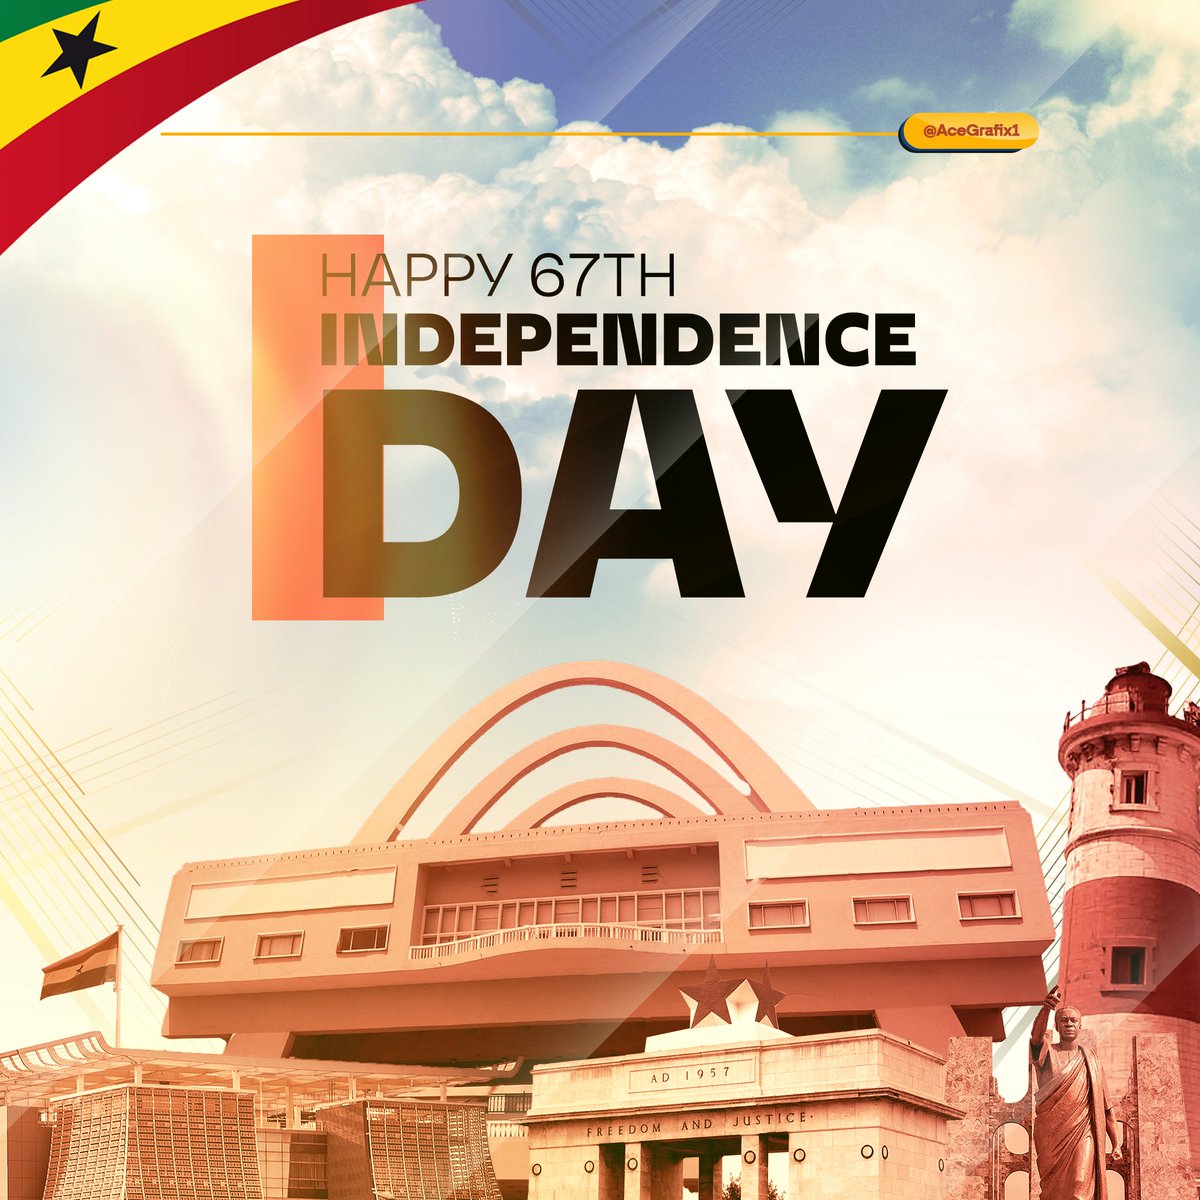 Happy 67th Independence Day to Y'all 🇬🇭 
.
.
#acegrafix #Ghana #independenceday #6thmarch #designer #designinspiration #design #designjob #designoftheday #graphics #graphicdesign #graphicdesigningjobs #flyerdigital #flyerdesign #exploretocreate #explorepage✨ #explorar #explore